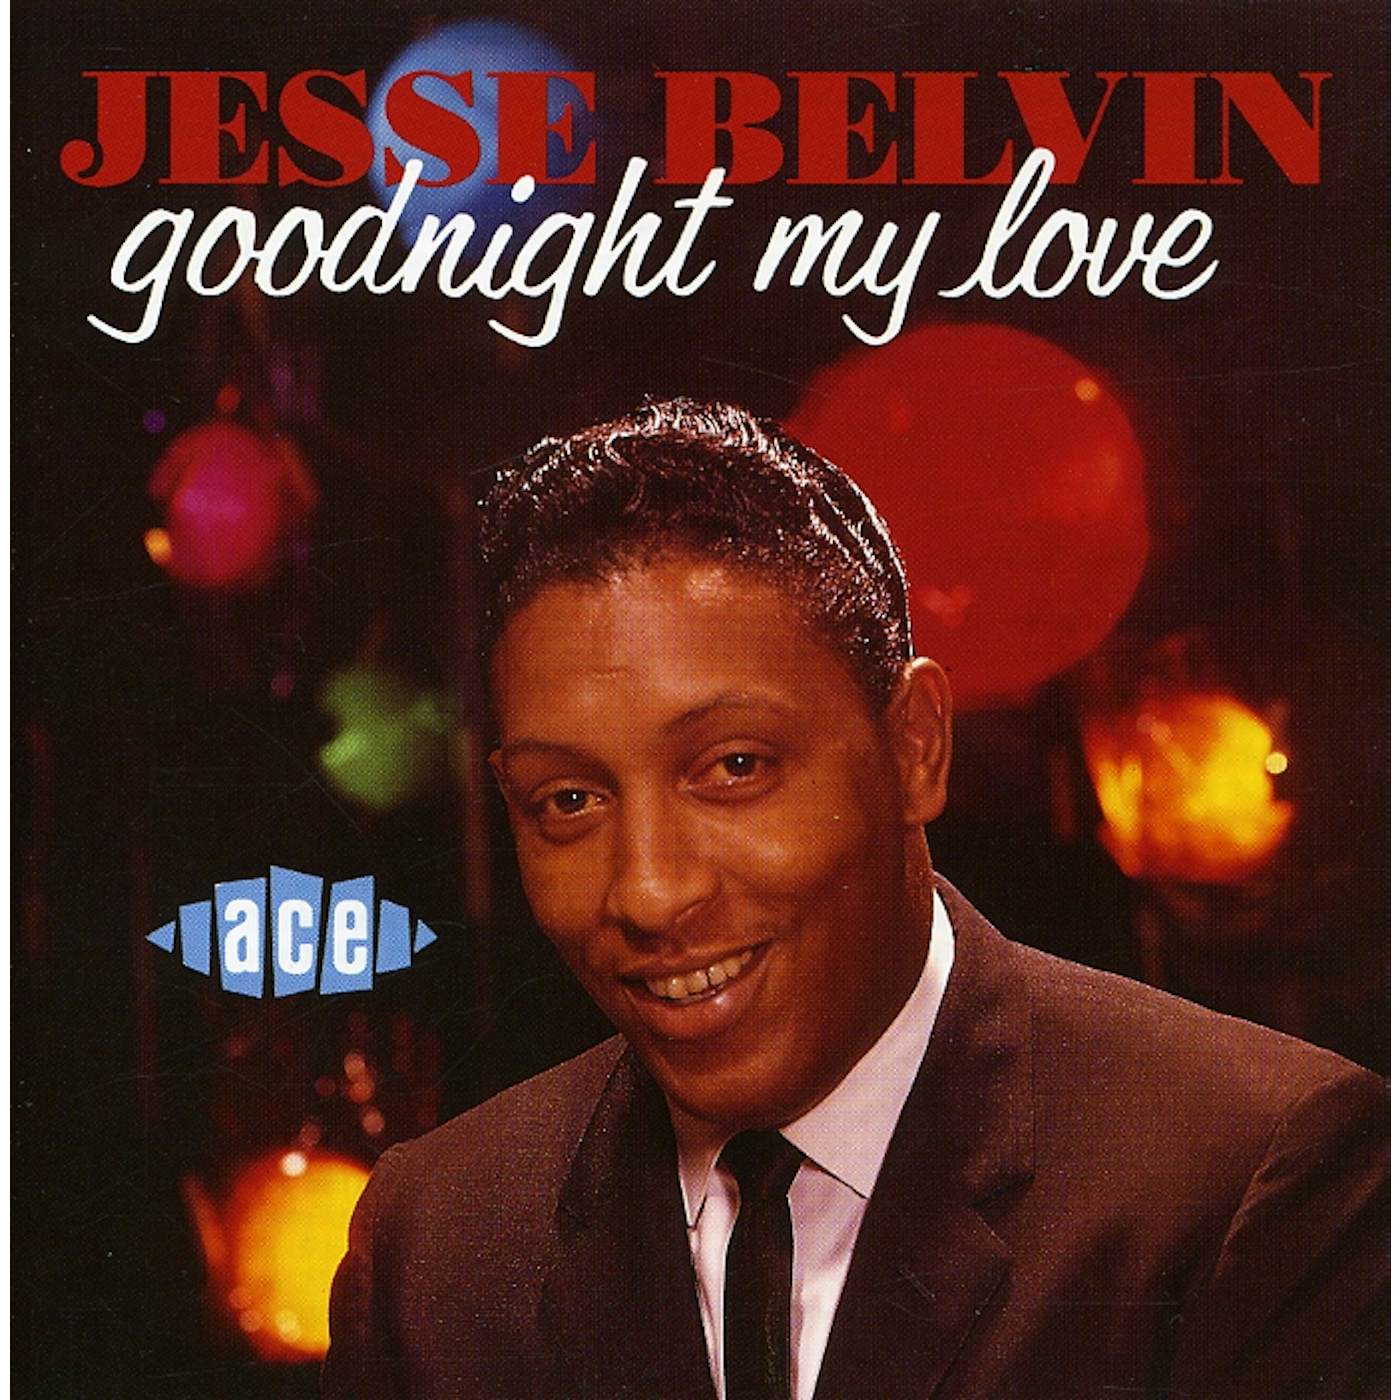 Jesse Belvin GOODNIGHT MY LOVE CD